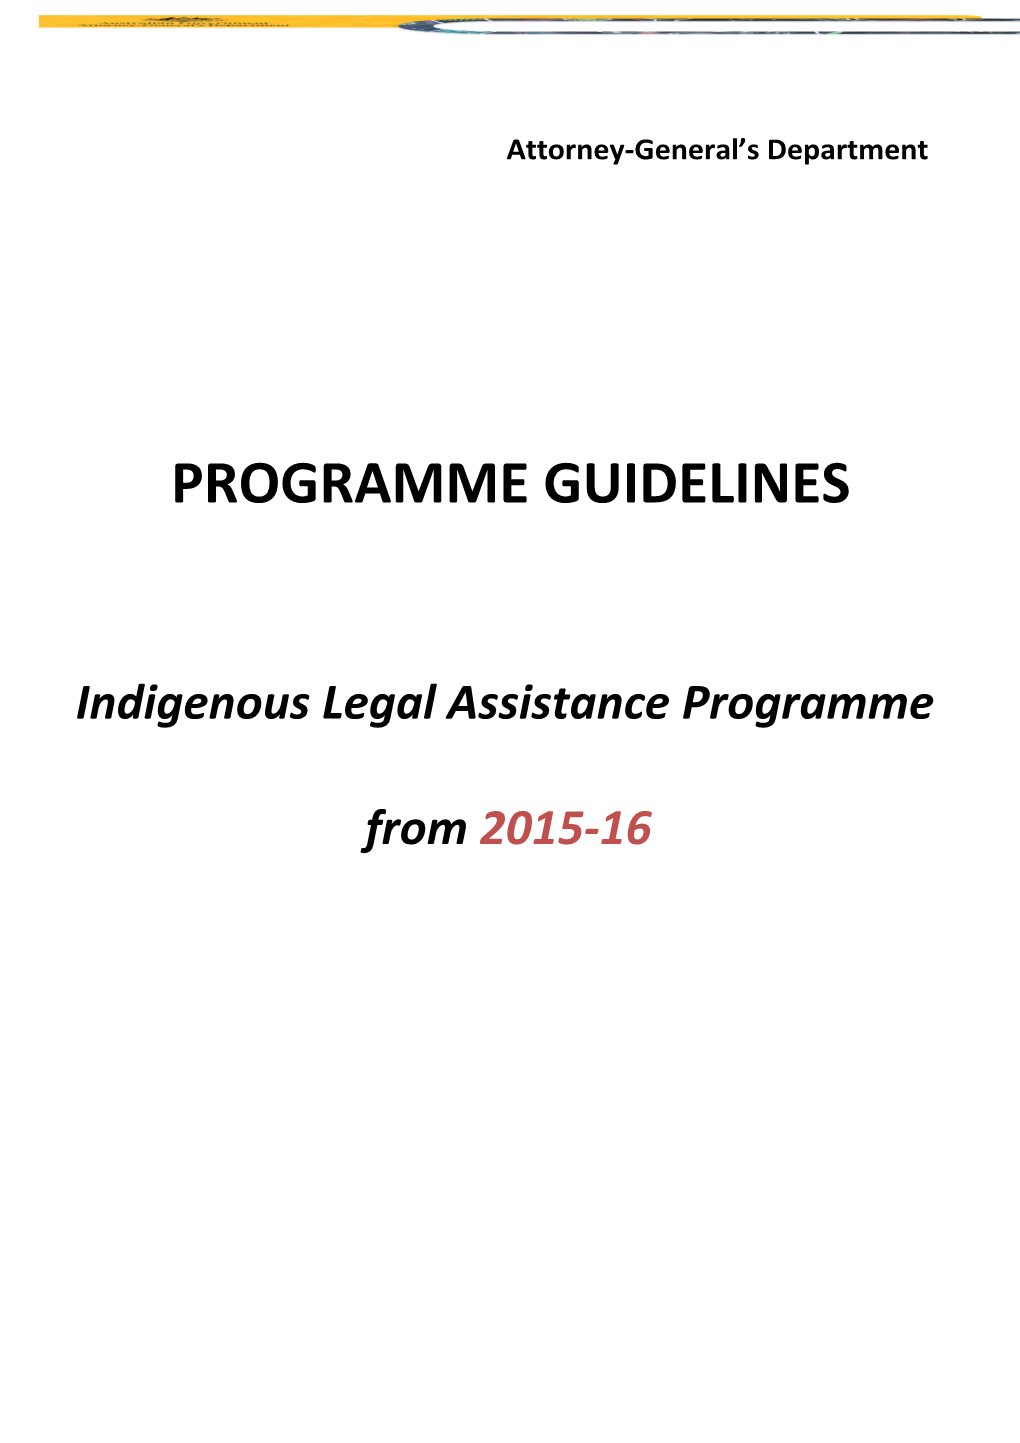 Programme Guidelines - Indigenous Legal Assistance Programme 2015-16